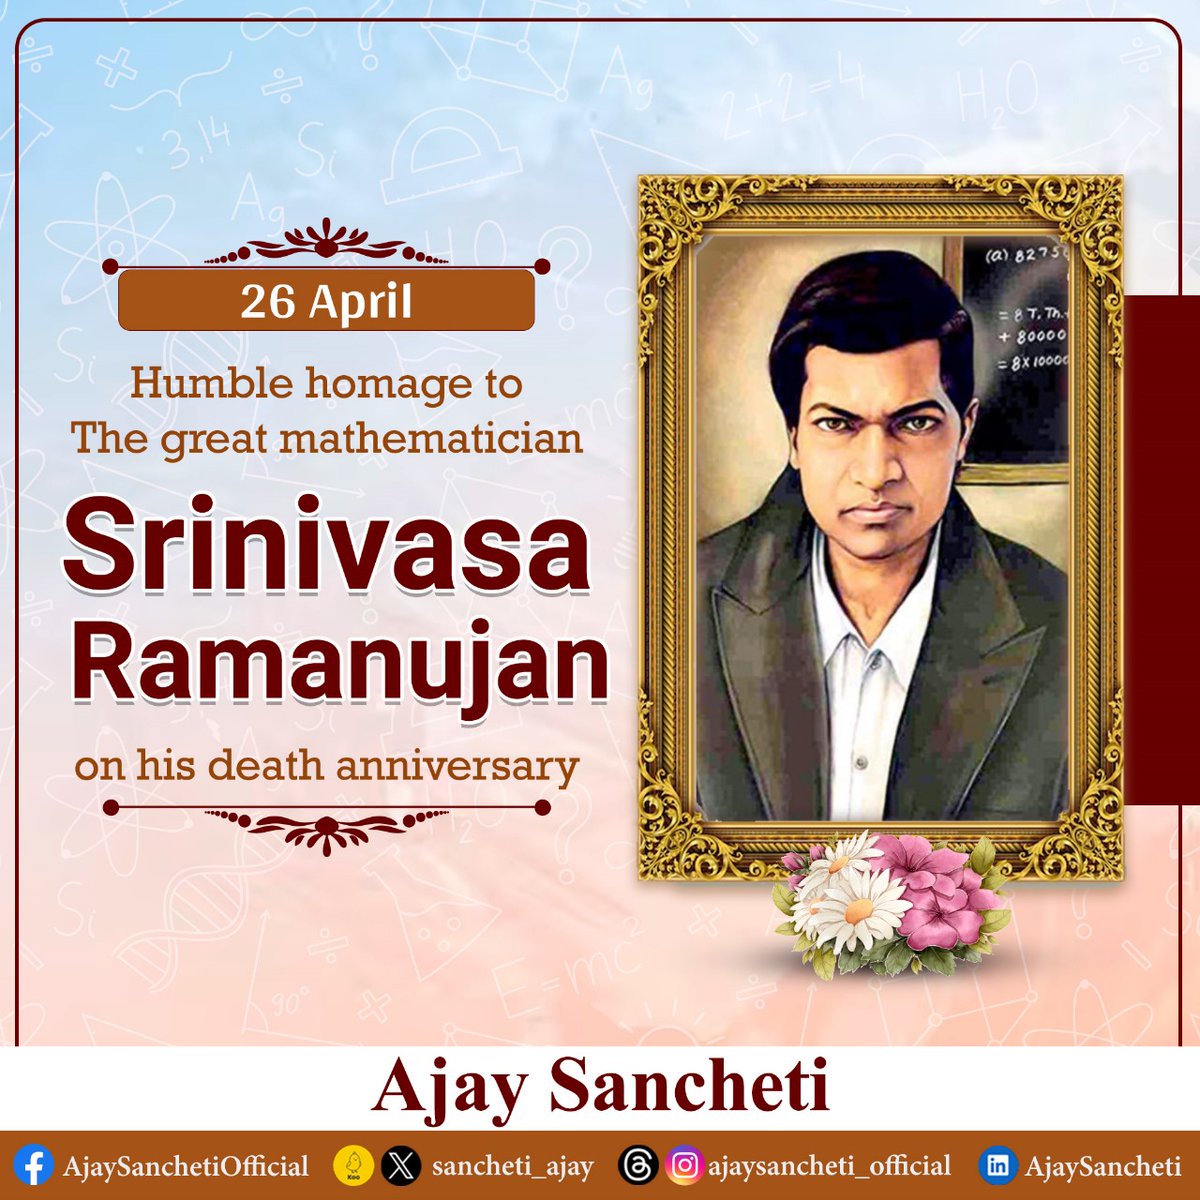 Humble homage to the great Mathematician Srinivasa Ramanujan on his death anniversary.

#SrinivasaRamanujan